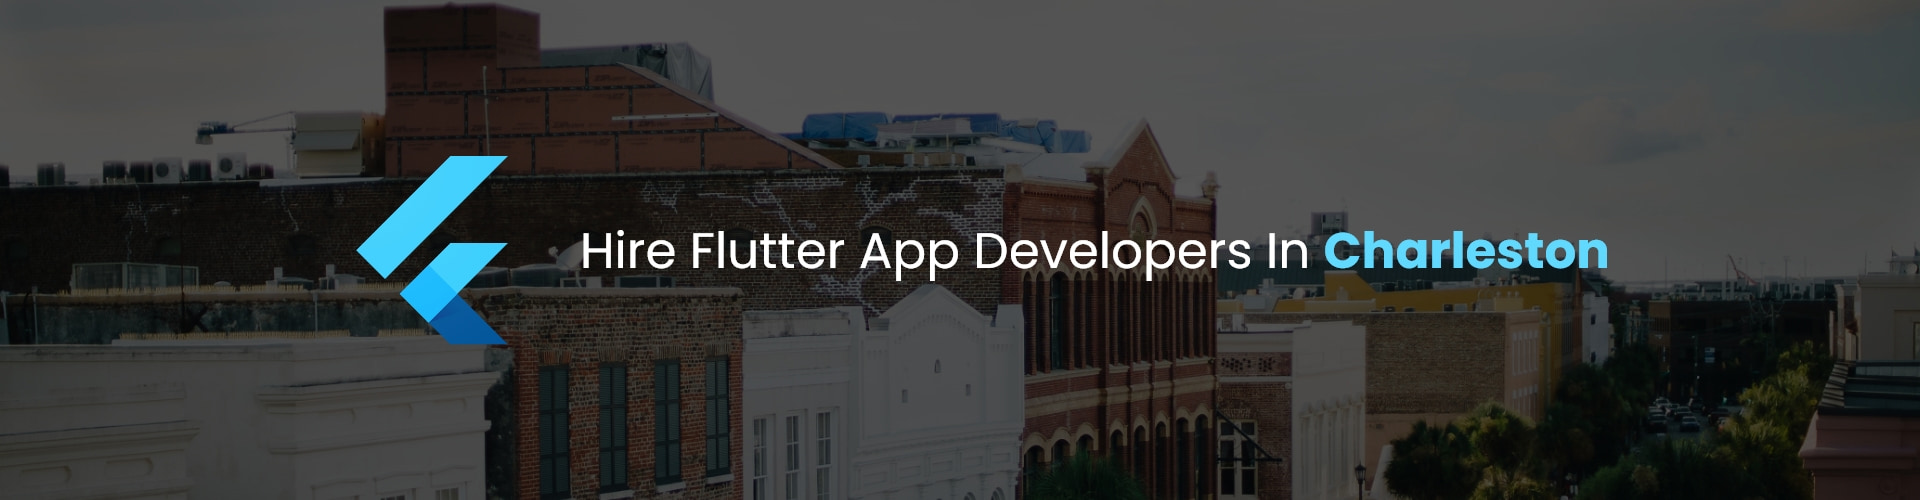 hire flutter app developers in charleston